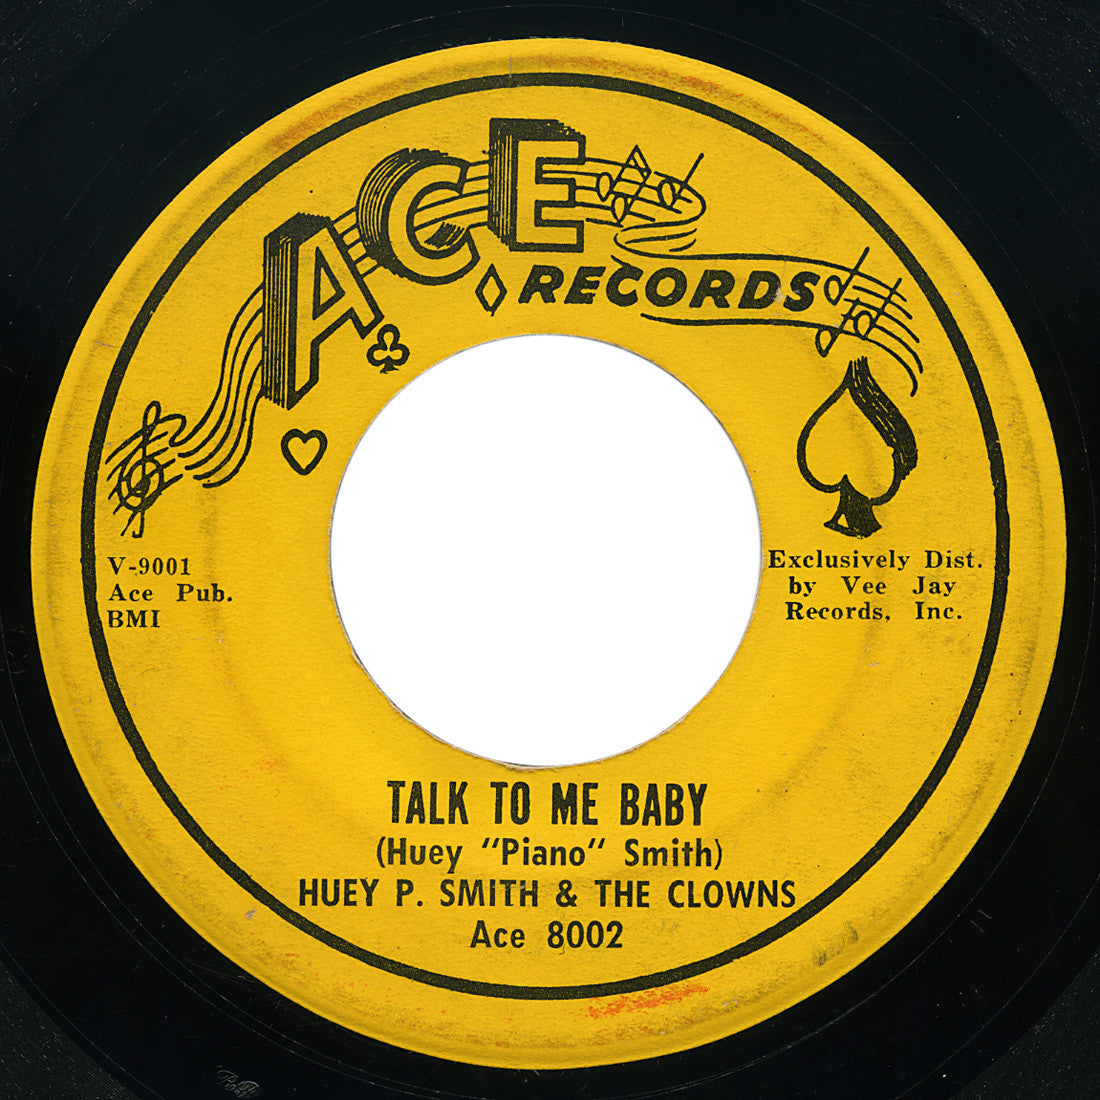 Huey P. Smith & The Clowns – Talk To Me Baby – Ace